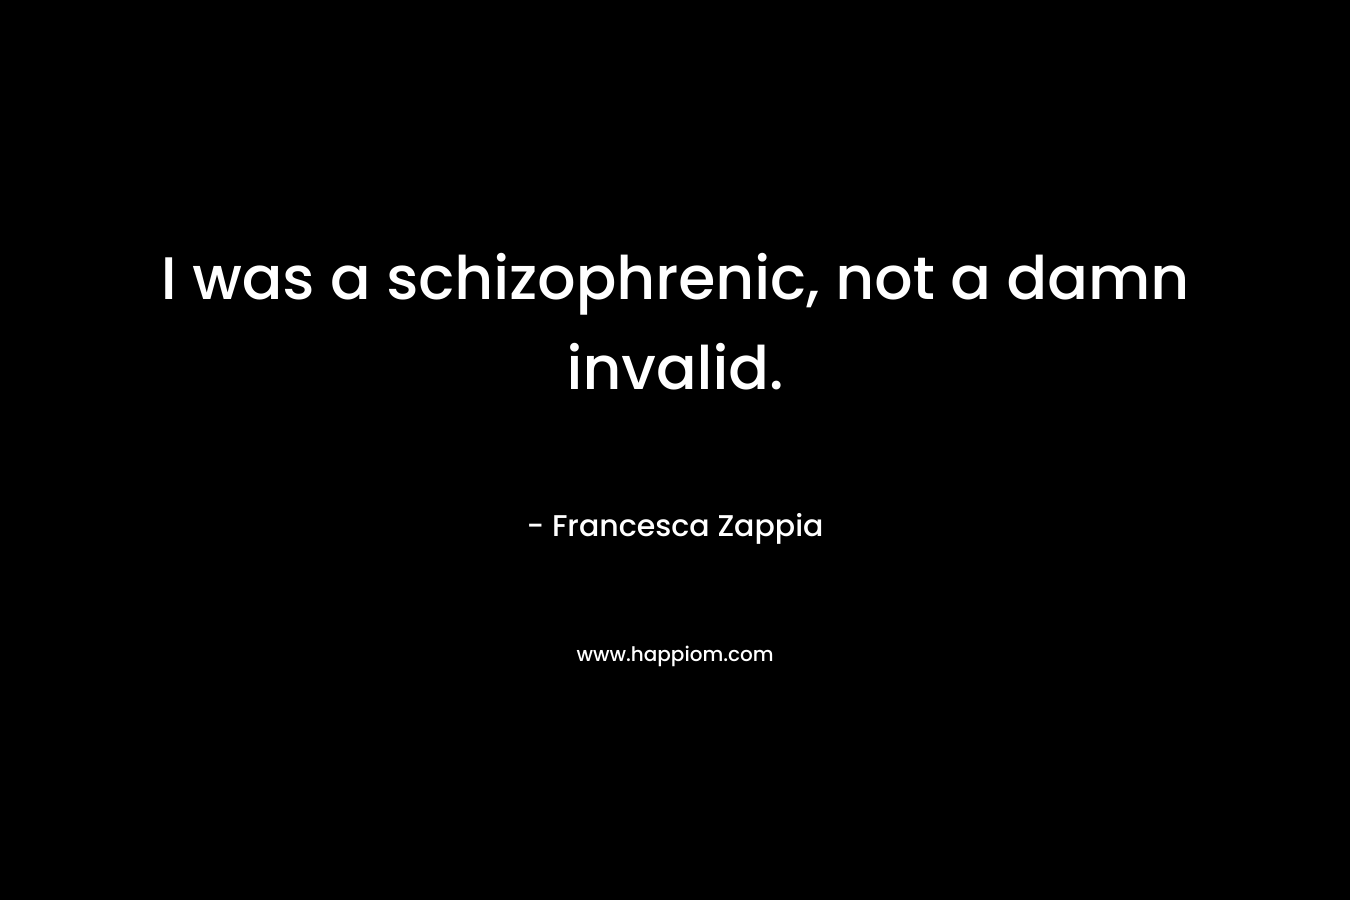 I was a schizophrenic, not a damn invalid.